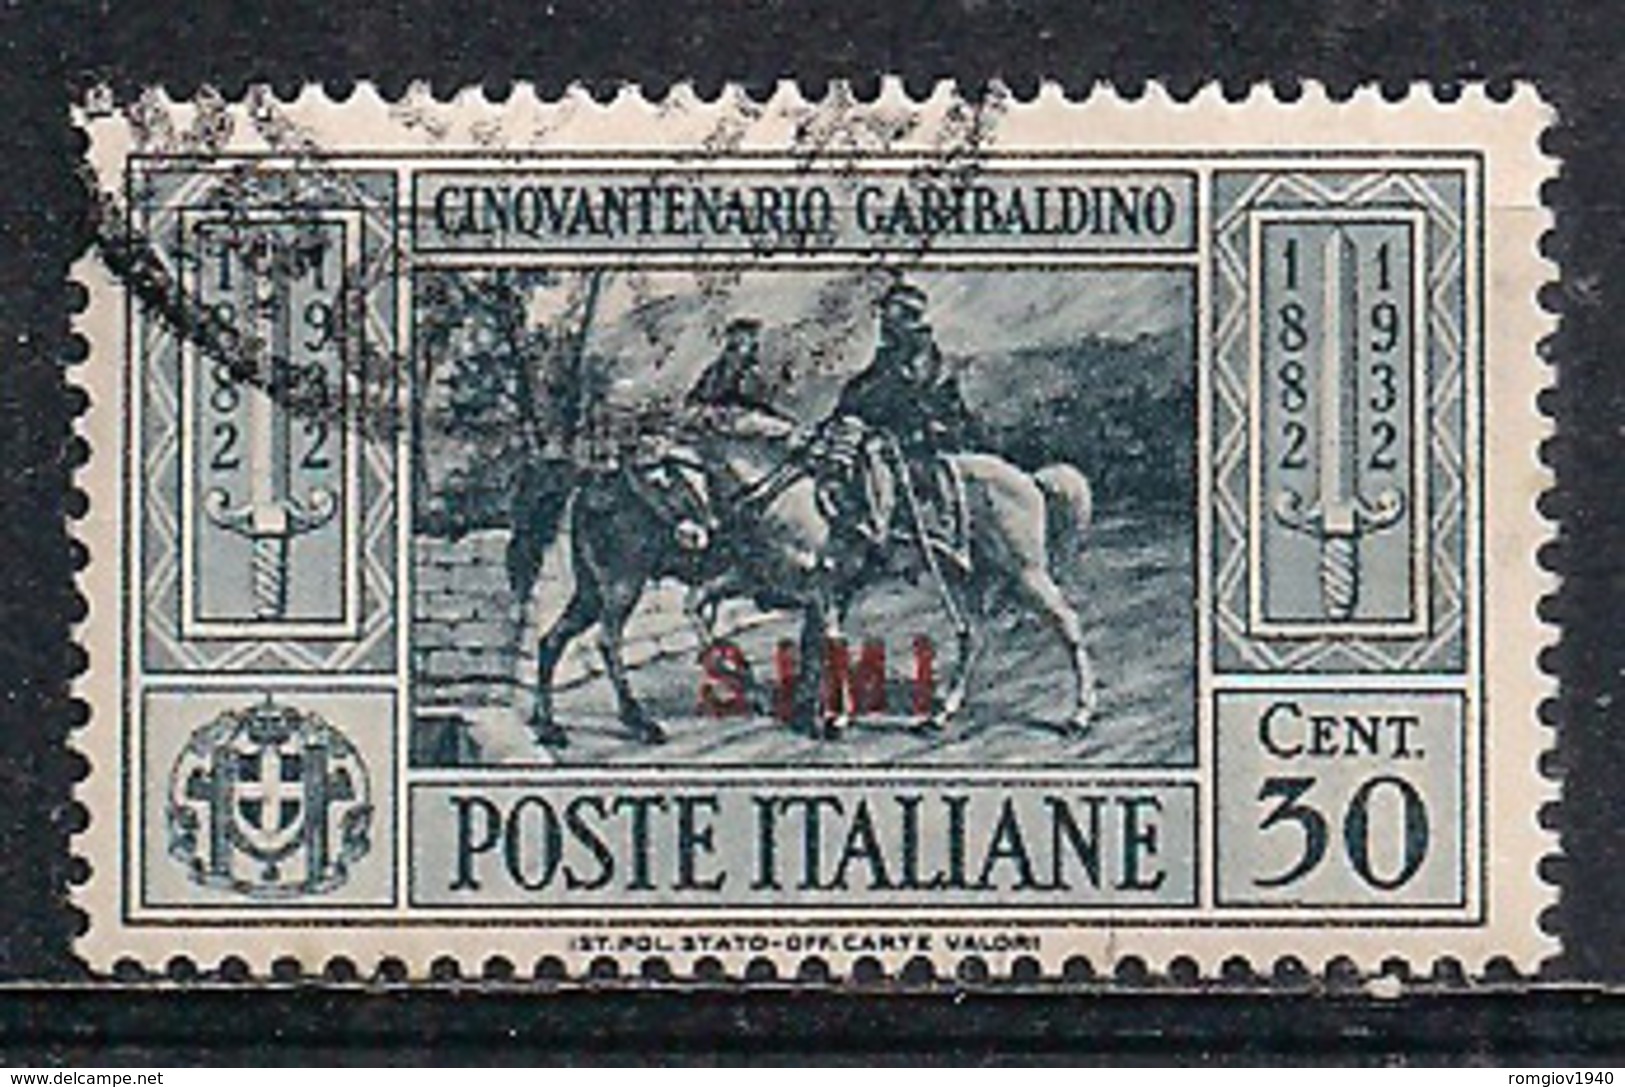 COLONIE ITALIANE1932 EGEO - SIMI GARIBALDI SASS. 20 USATO VF - Egée (Simi)